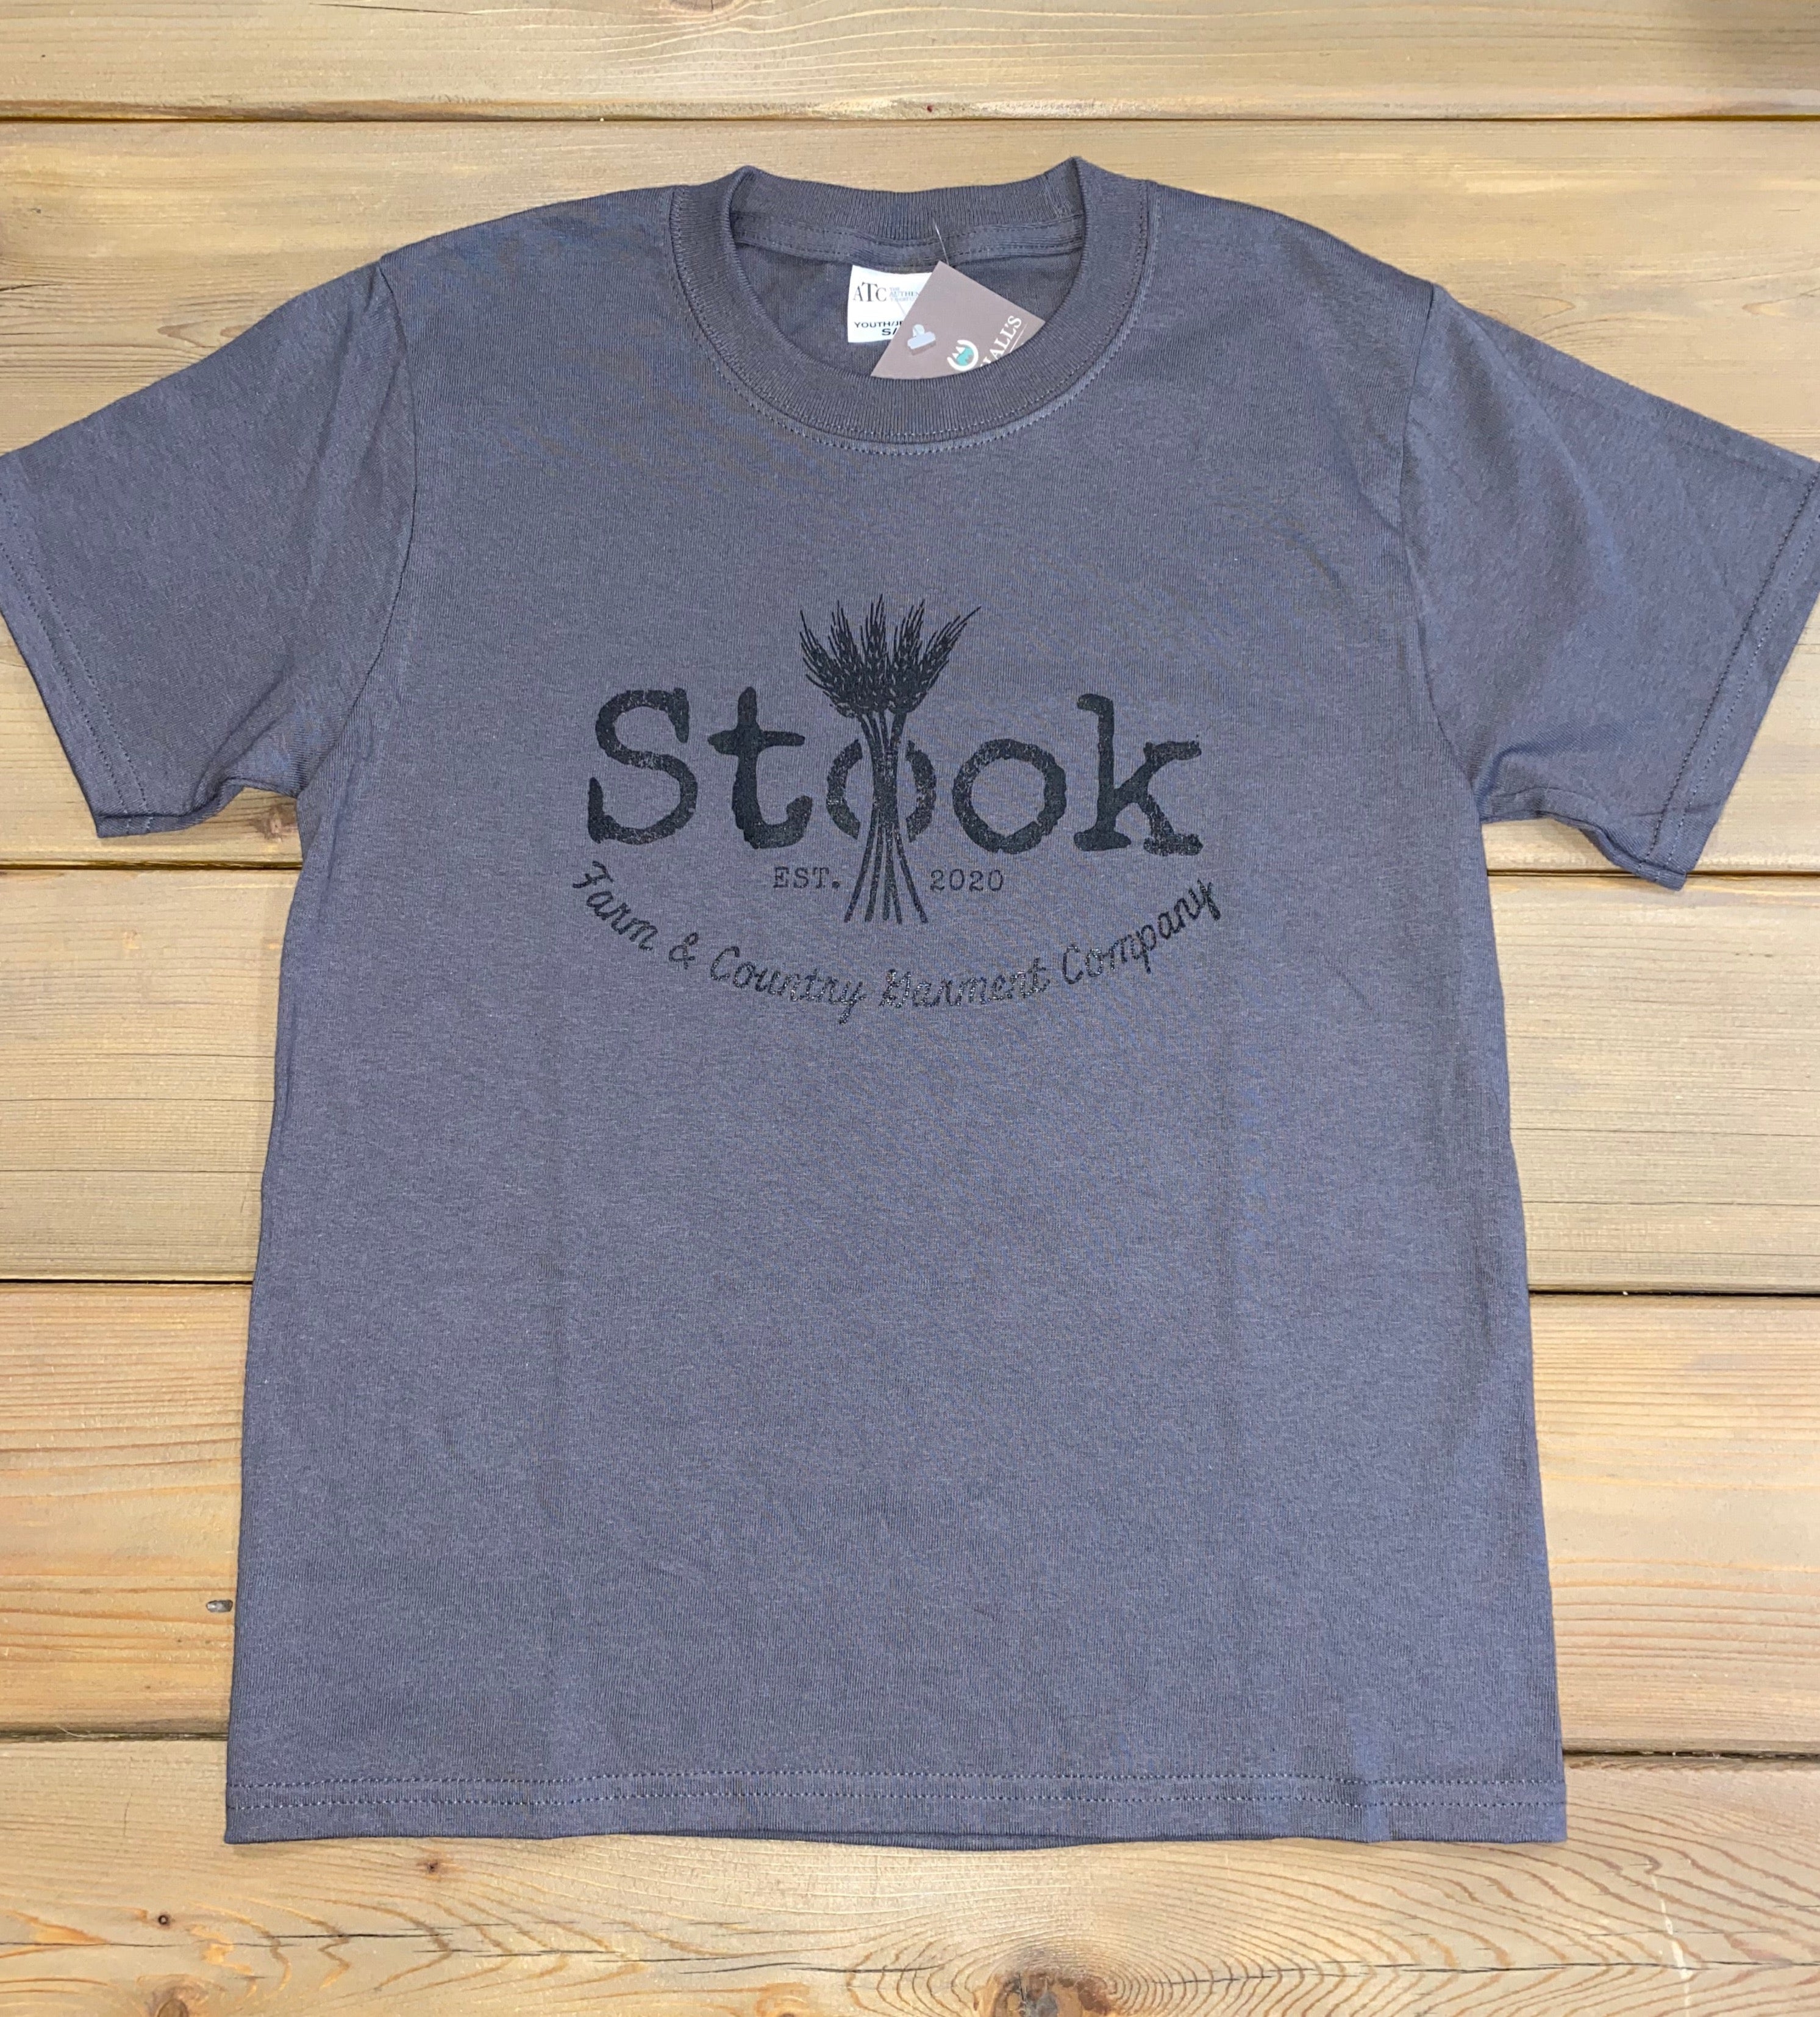 Stook Kids T-Shirts